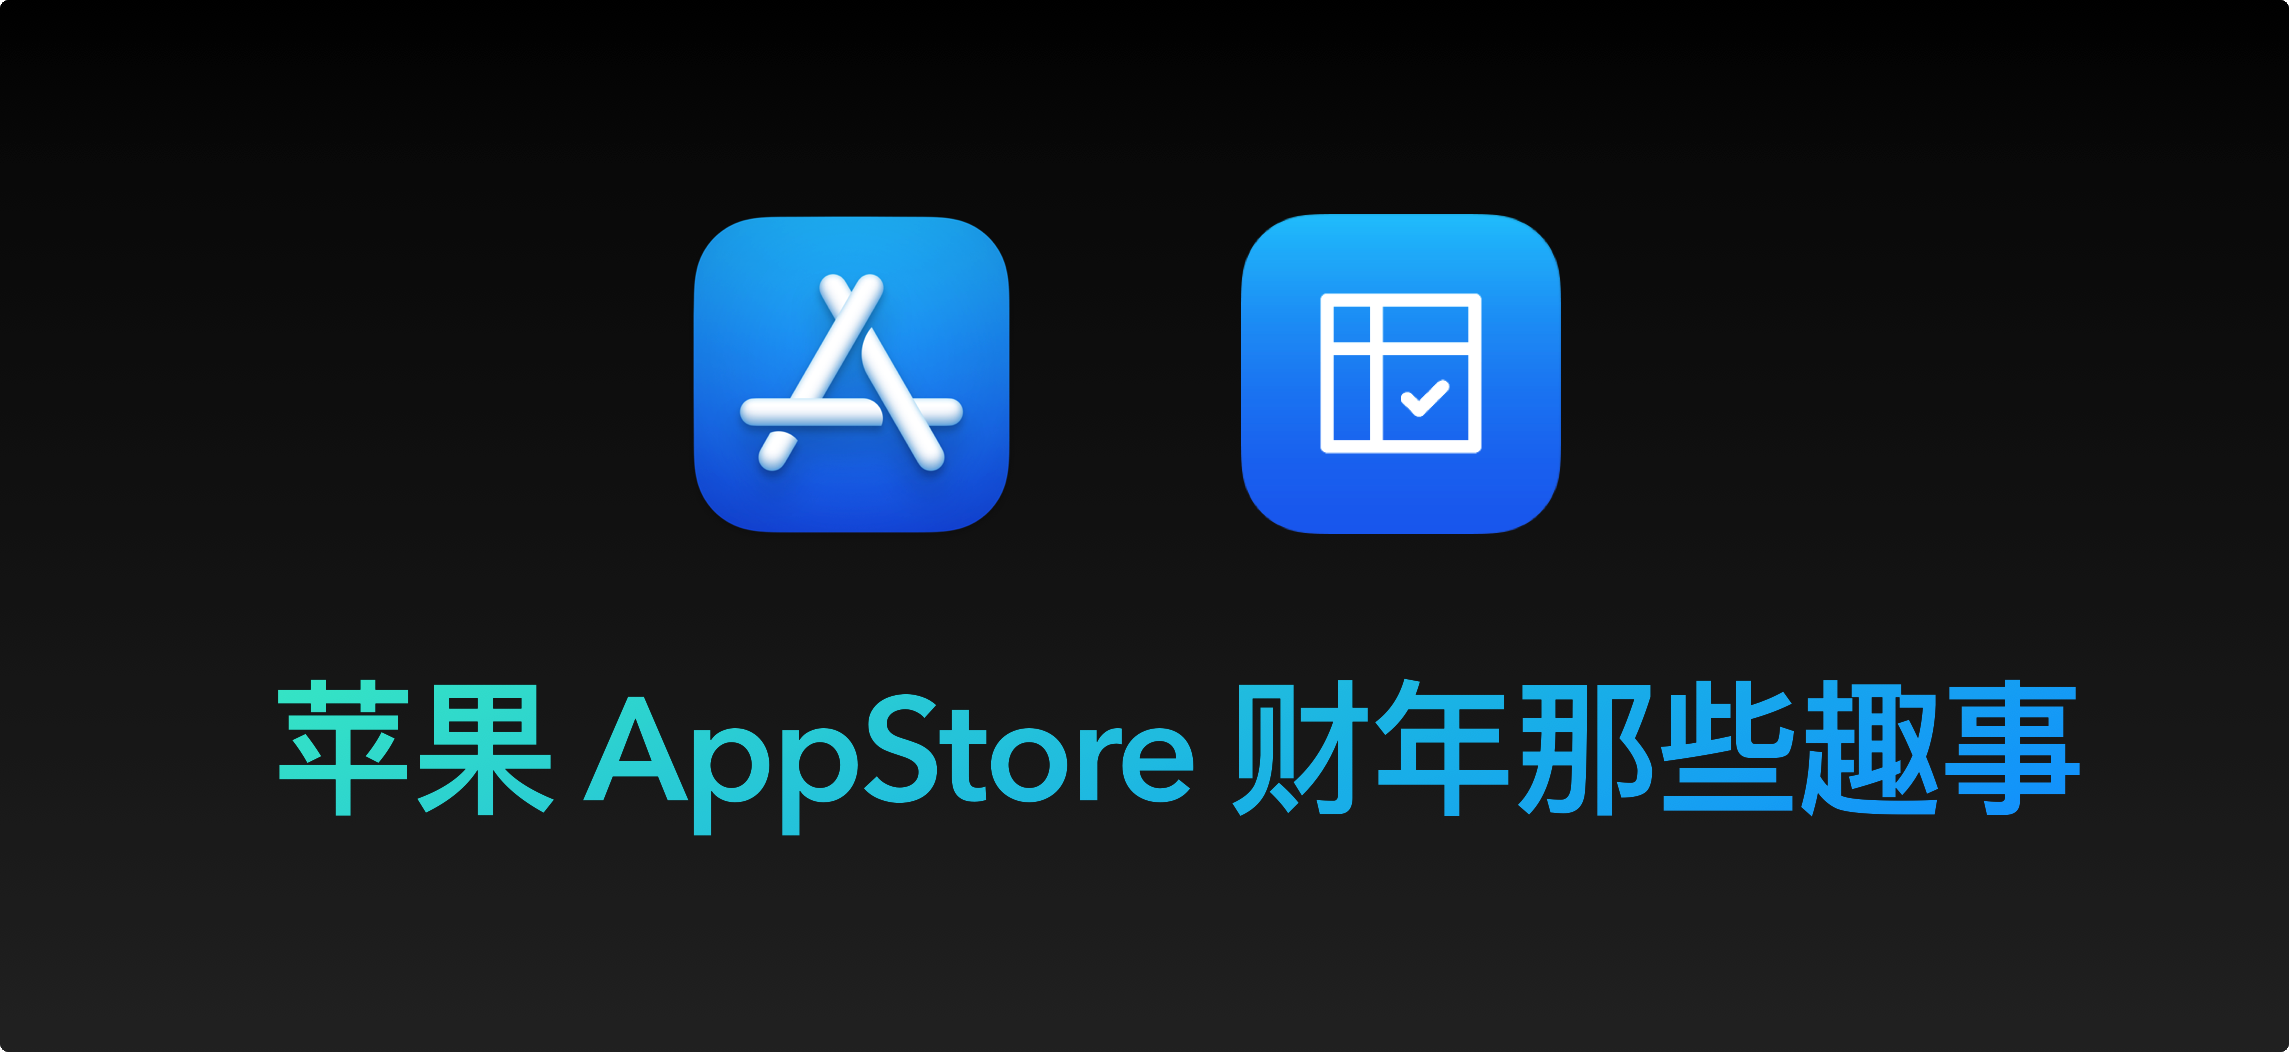 AppStore-Financial-00